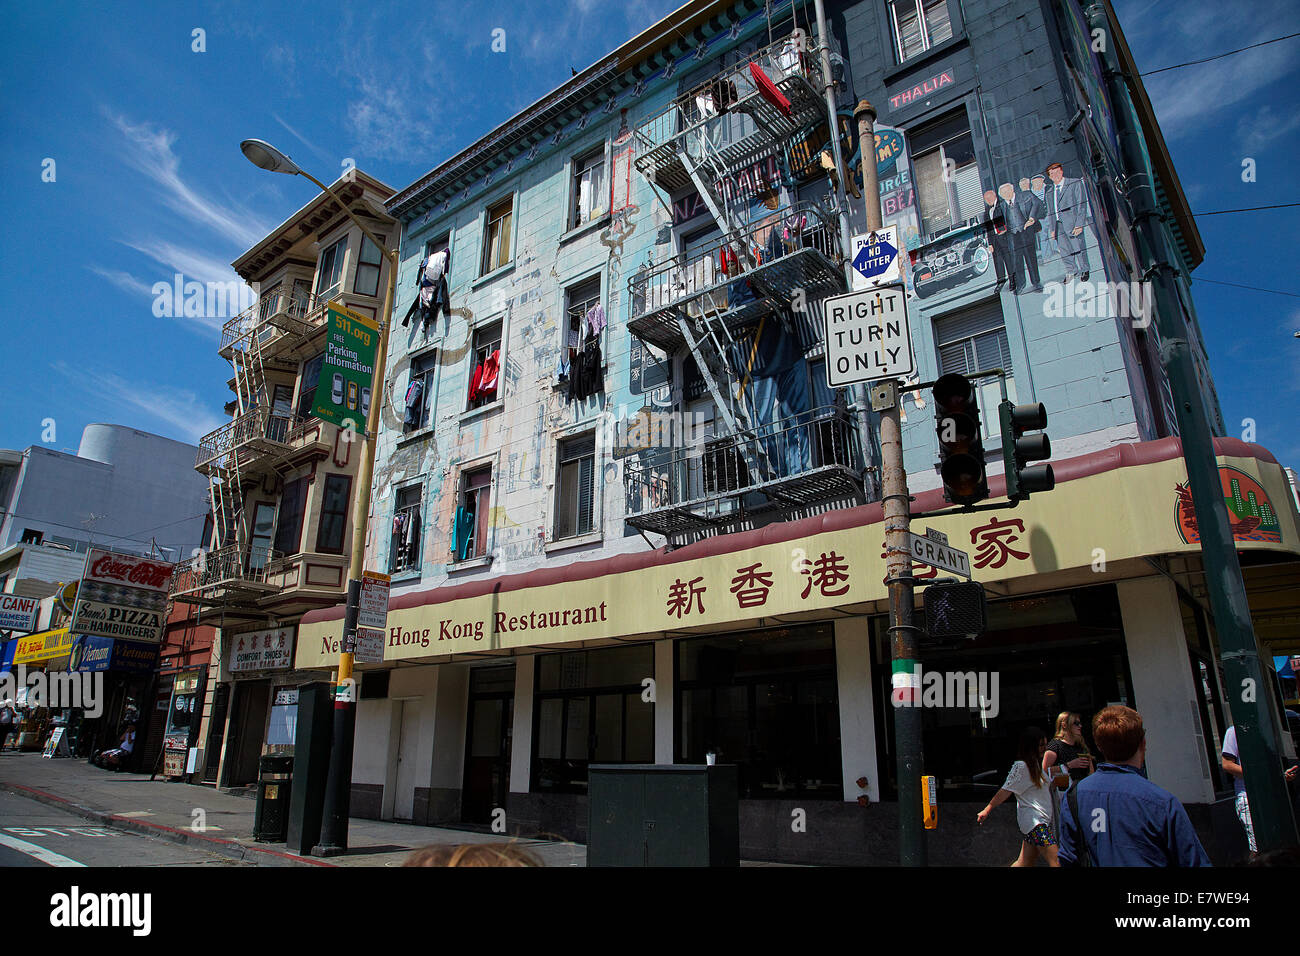 Washing and murals on building, Chinatown, San Francisco, California, USA Stock Photo